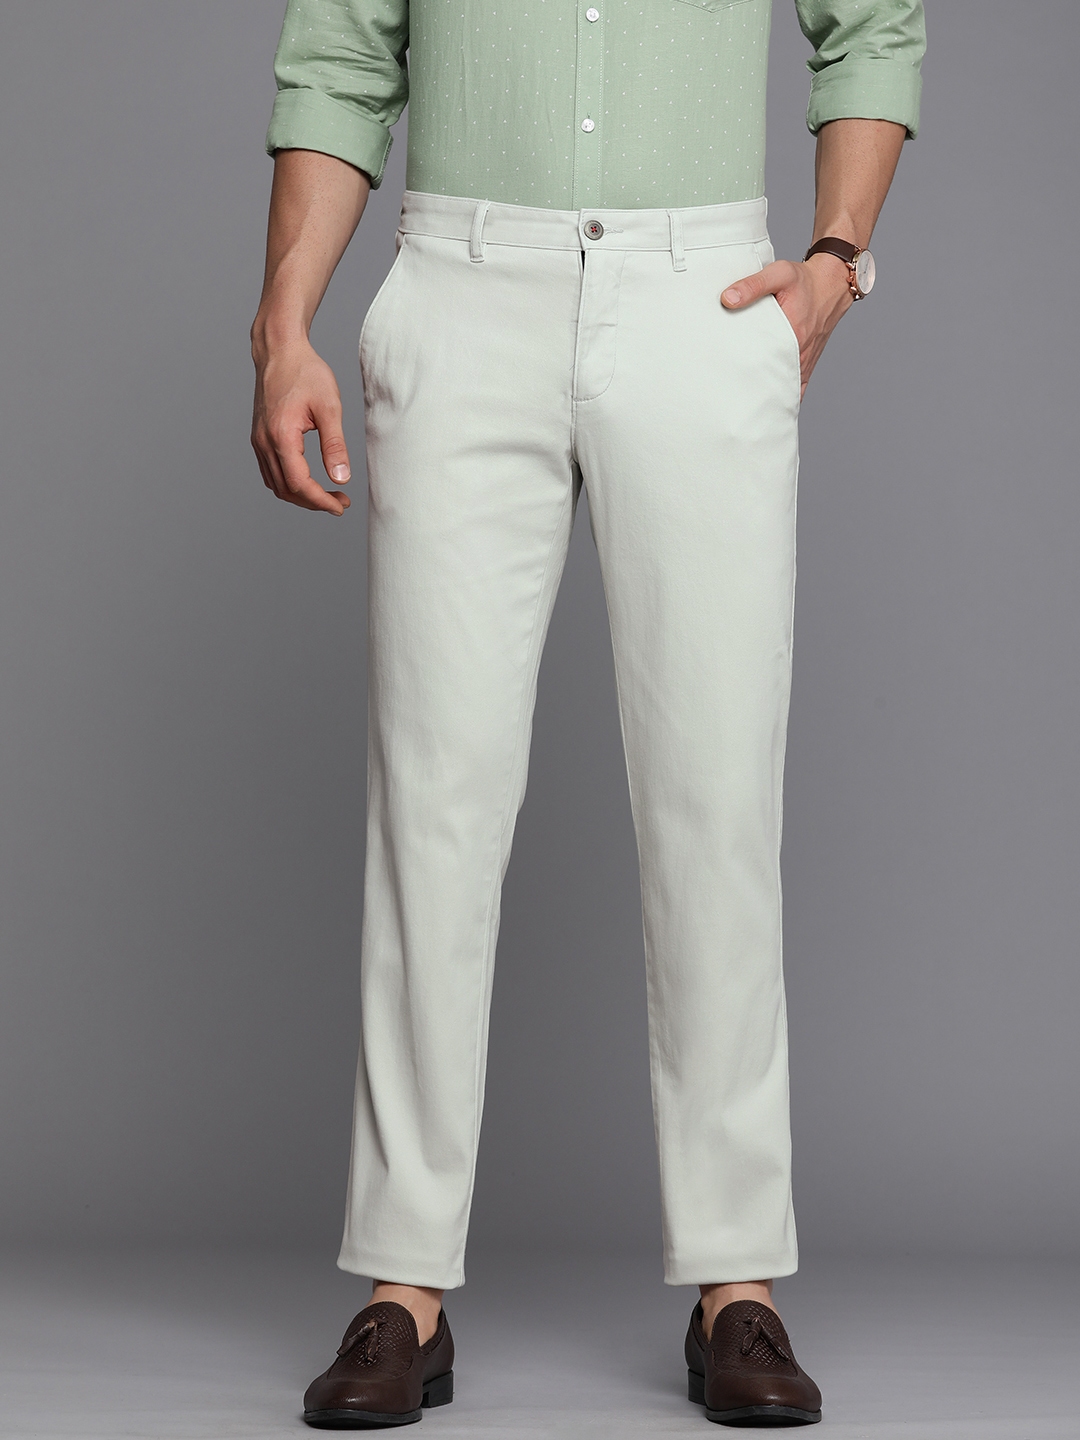 Louis Philippe Sport Slim Fit Men Khaki Trousers - Buy Louis Philippe Sport  Slim Fit Men Khaki Trousers Online at Best Prices in India